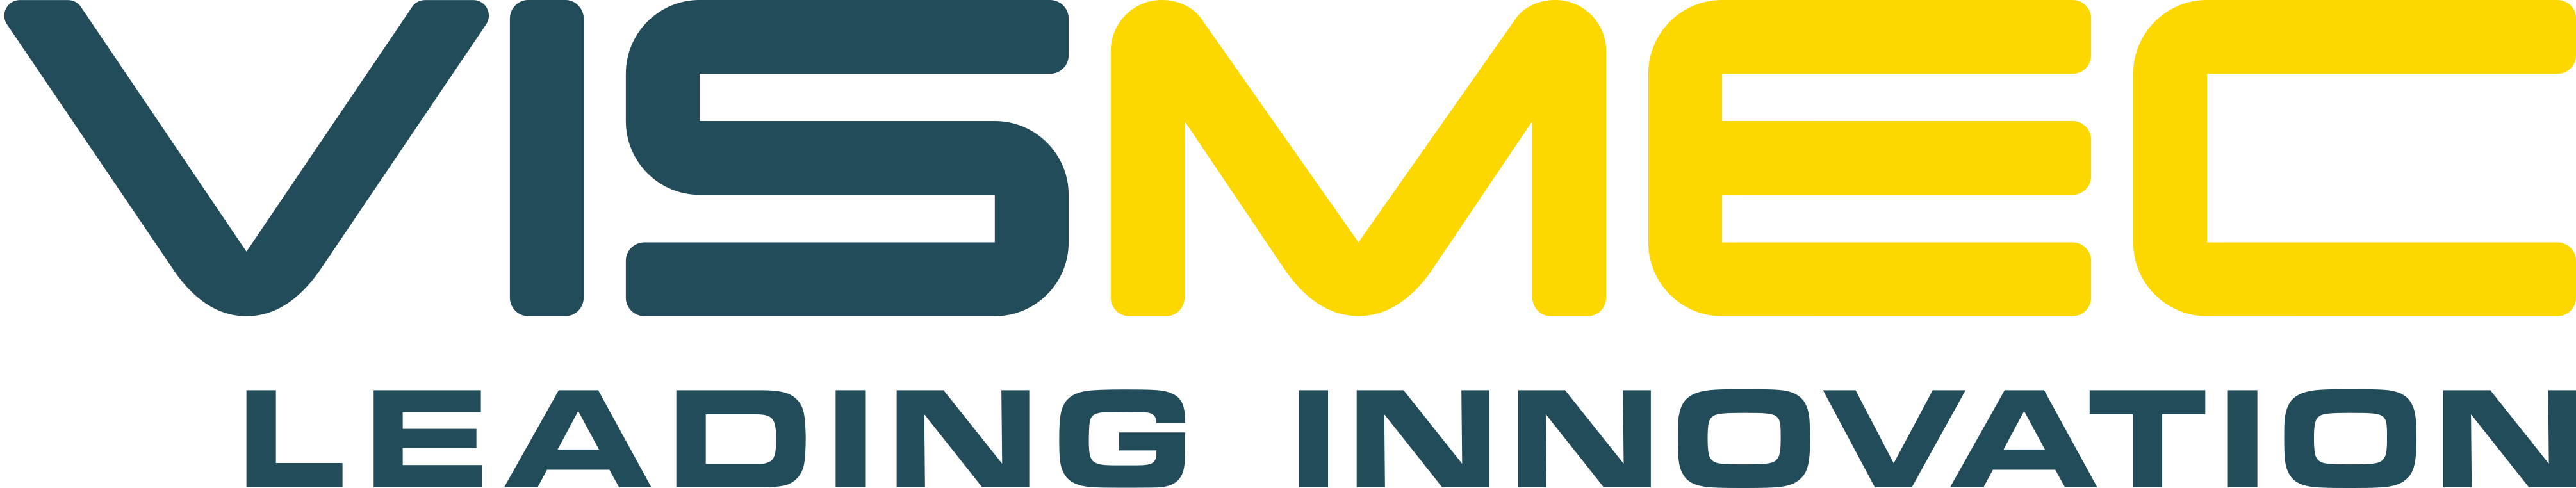 Logo Vismec